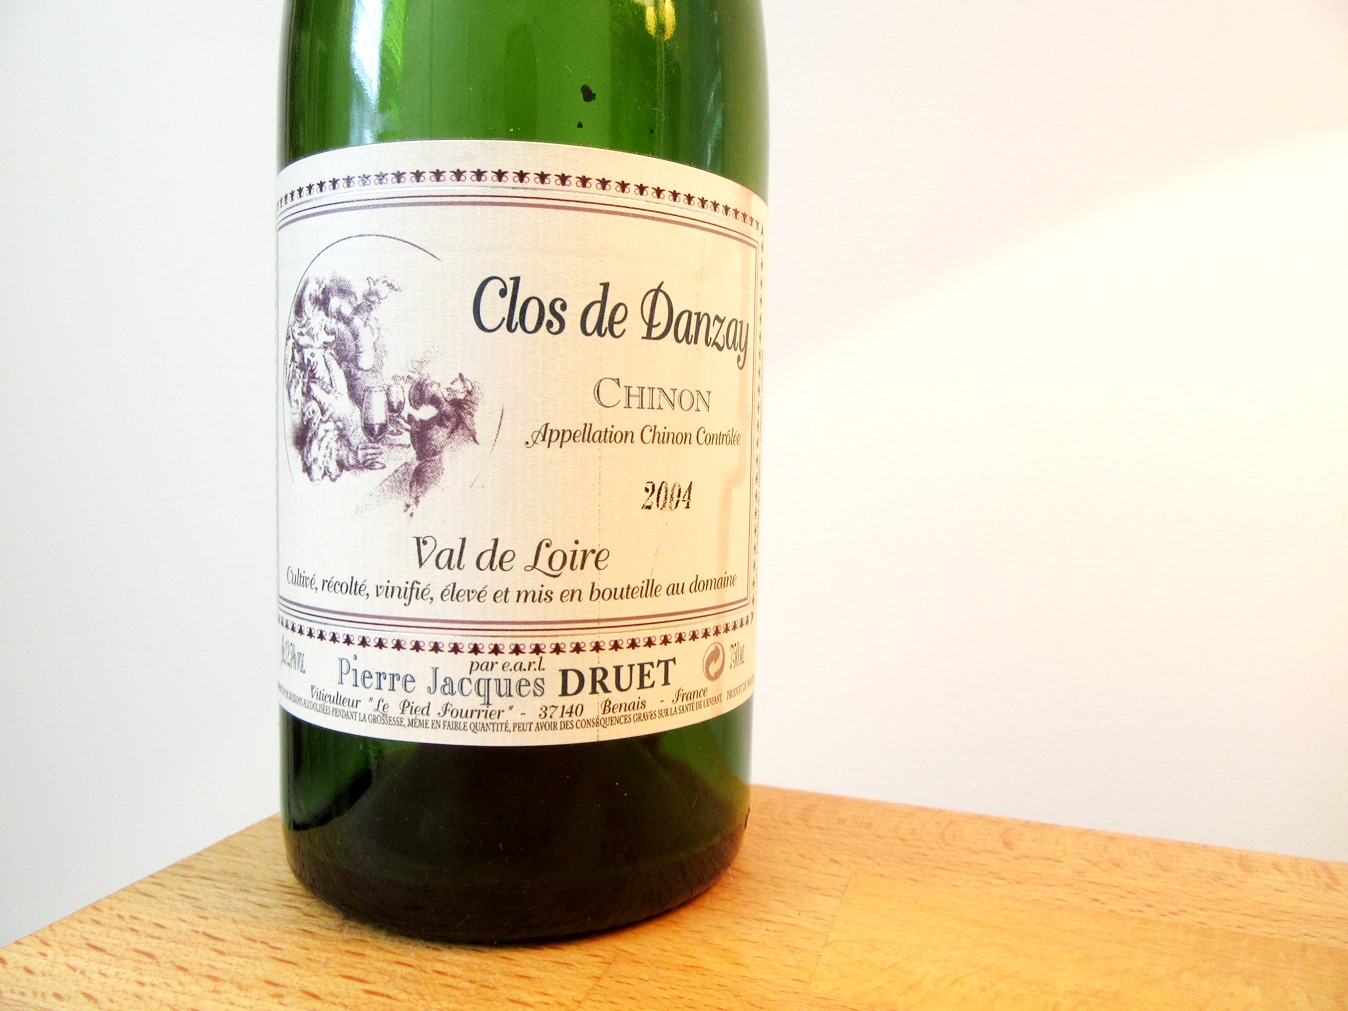 Pierre Jacques Druet, Clos de Danzay Chinon 2004, Loire, France, Wine Casual